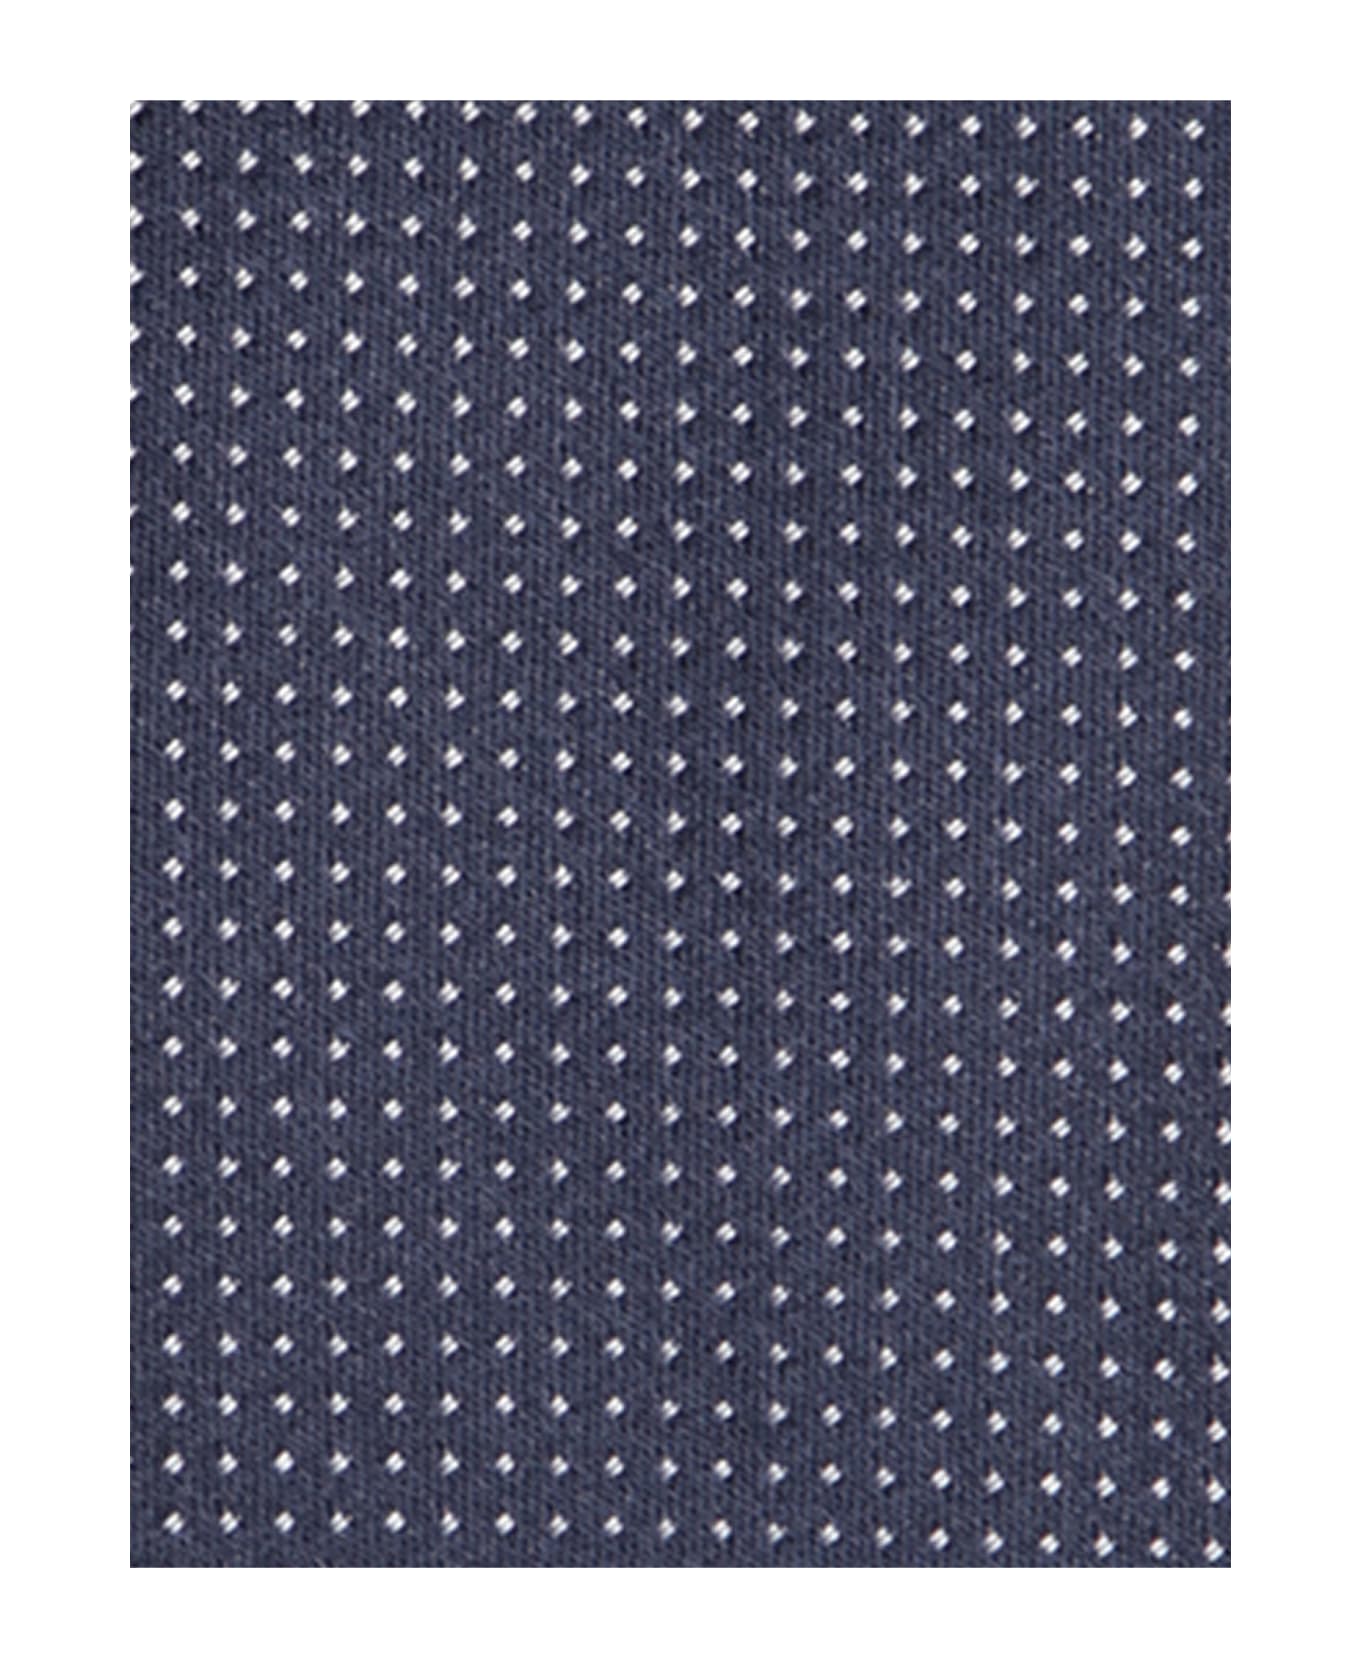 Lardini Blue Micro Polka Dot Tie - Blue ネクタイ